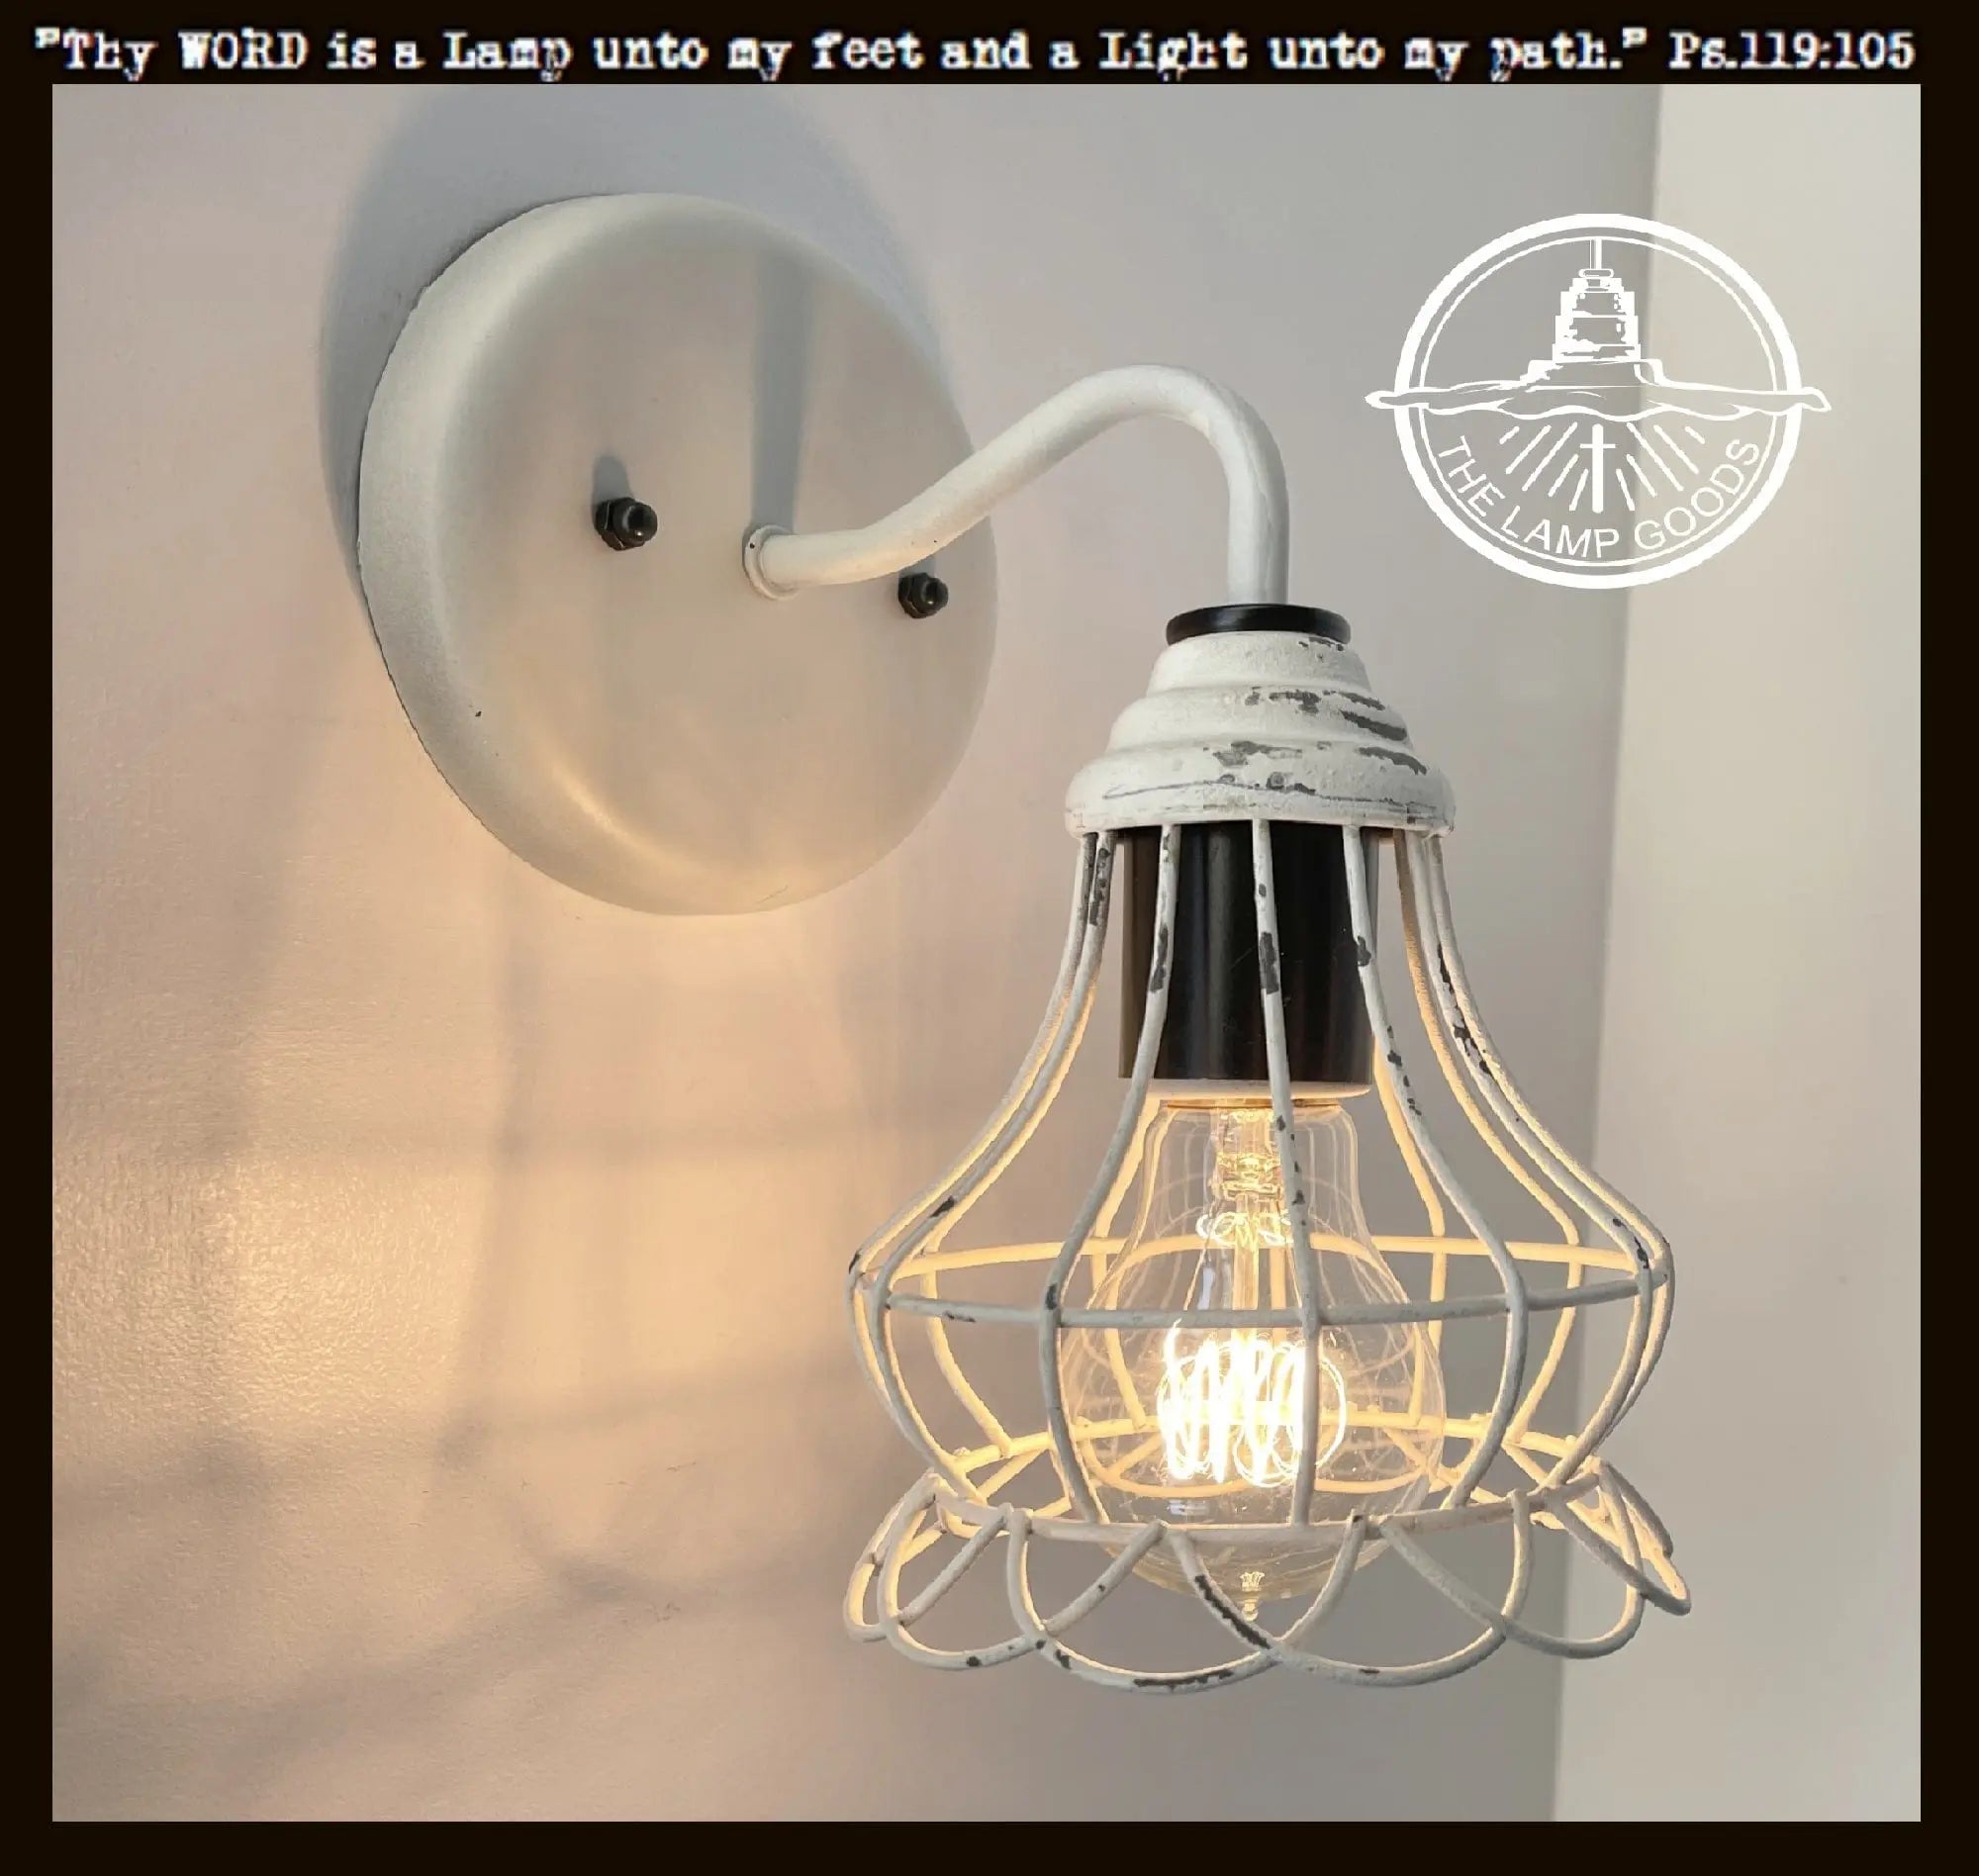 Shop Lighting for Rustic, Industrial Light Fixtures - The Lamp Goods